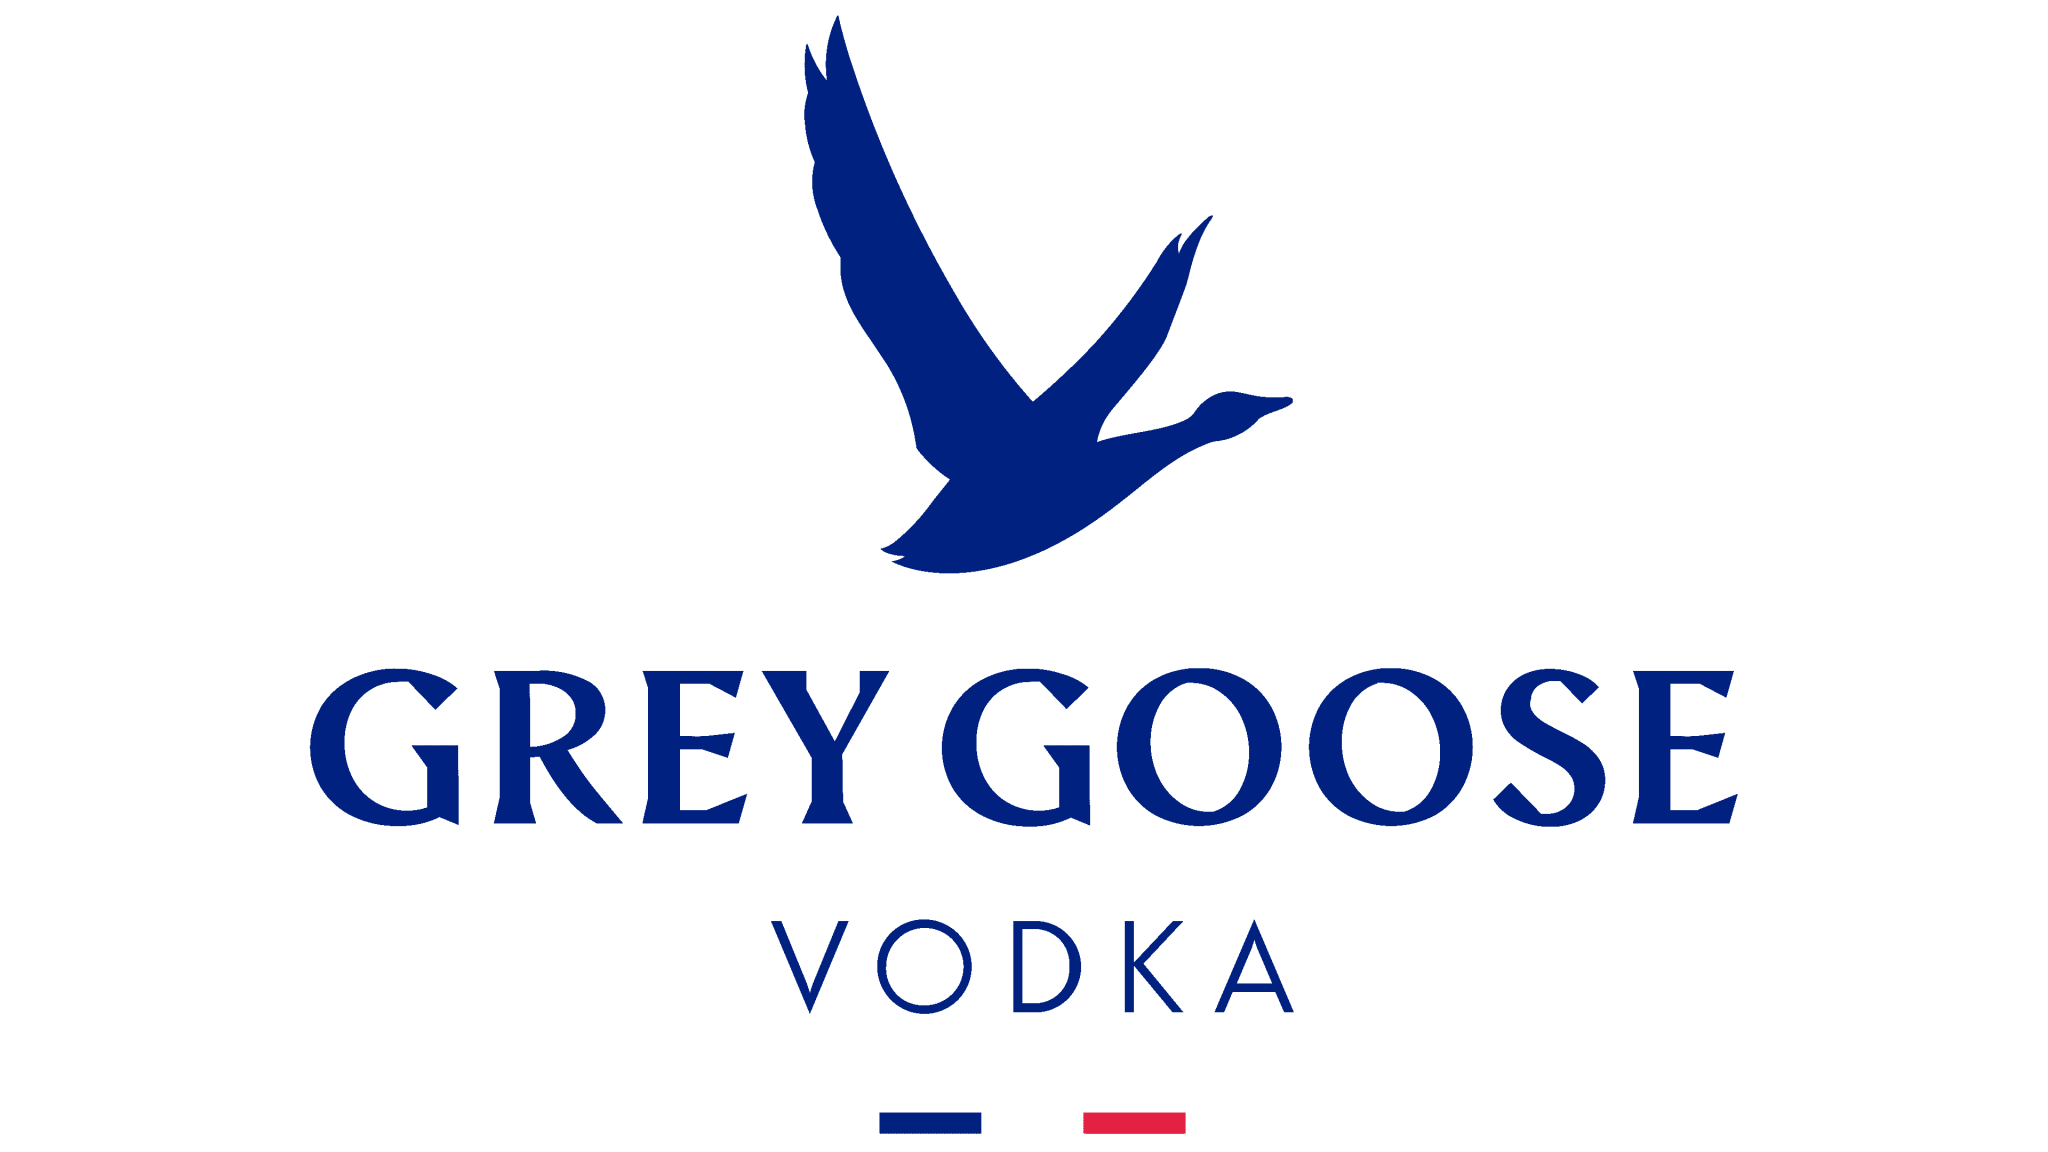 Grey goose logo png - Download Free Png Images